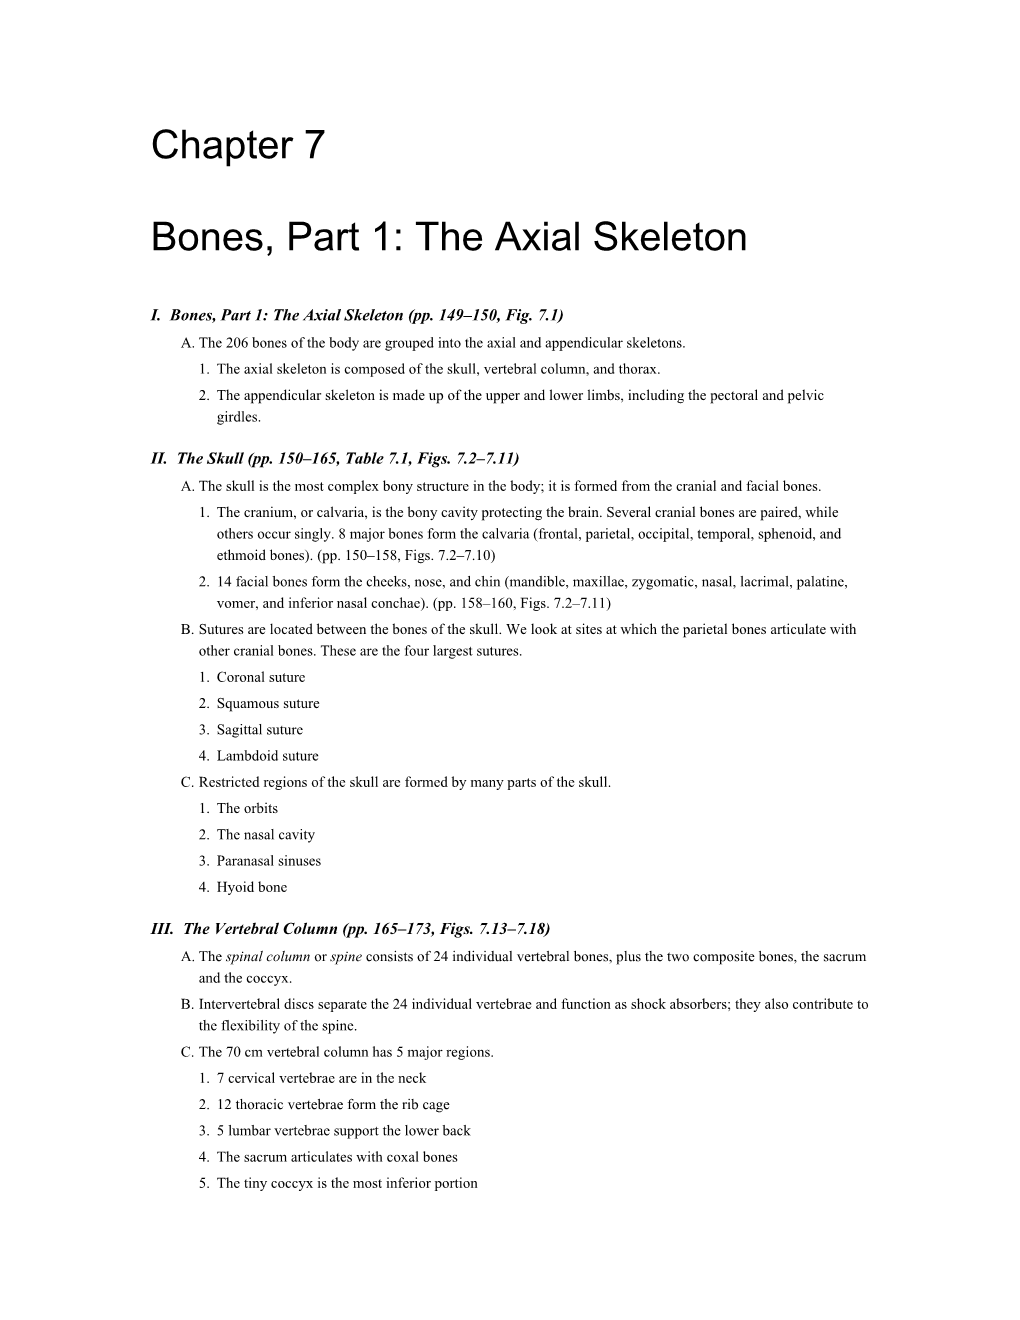 I. Bones, Part 1: the Axial Skeleton (Pp. 149 150, Fig. 7.1)